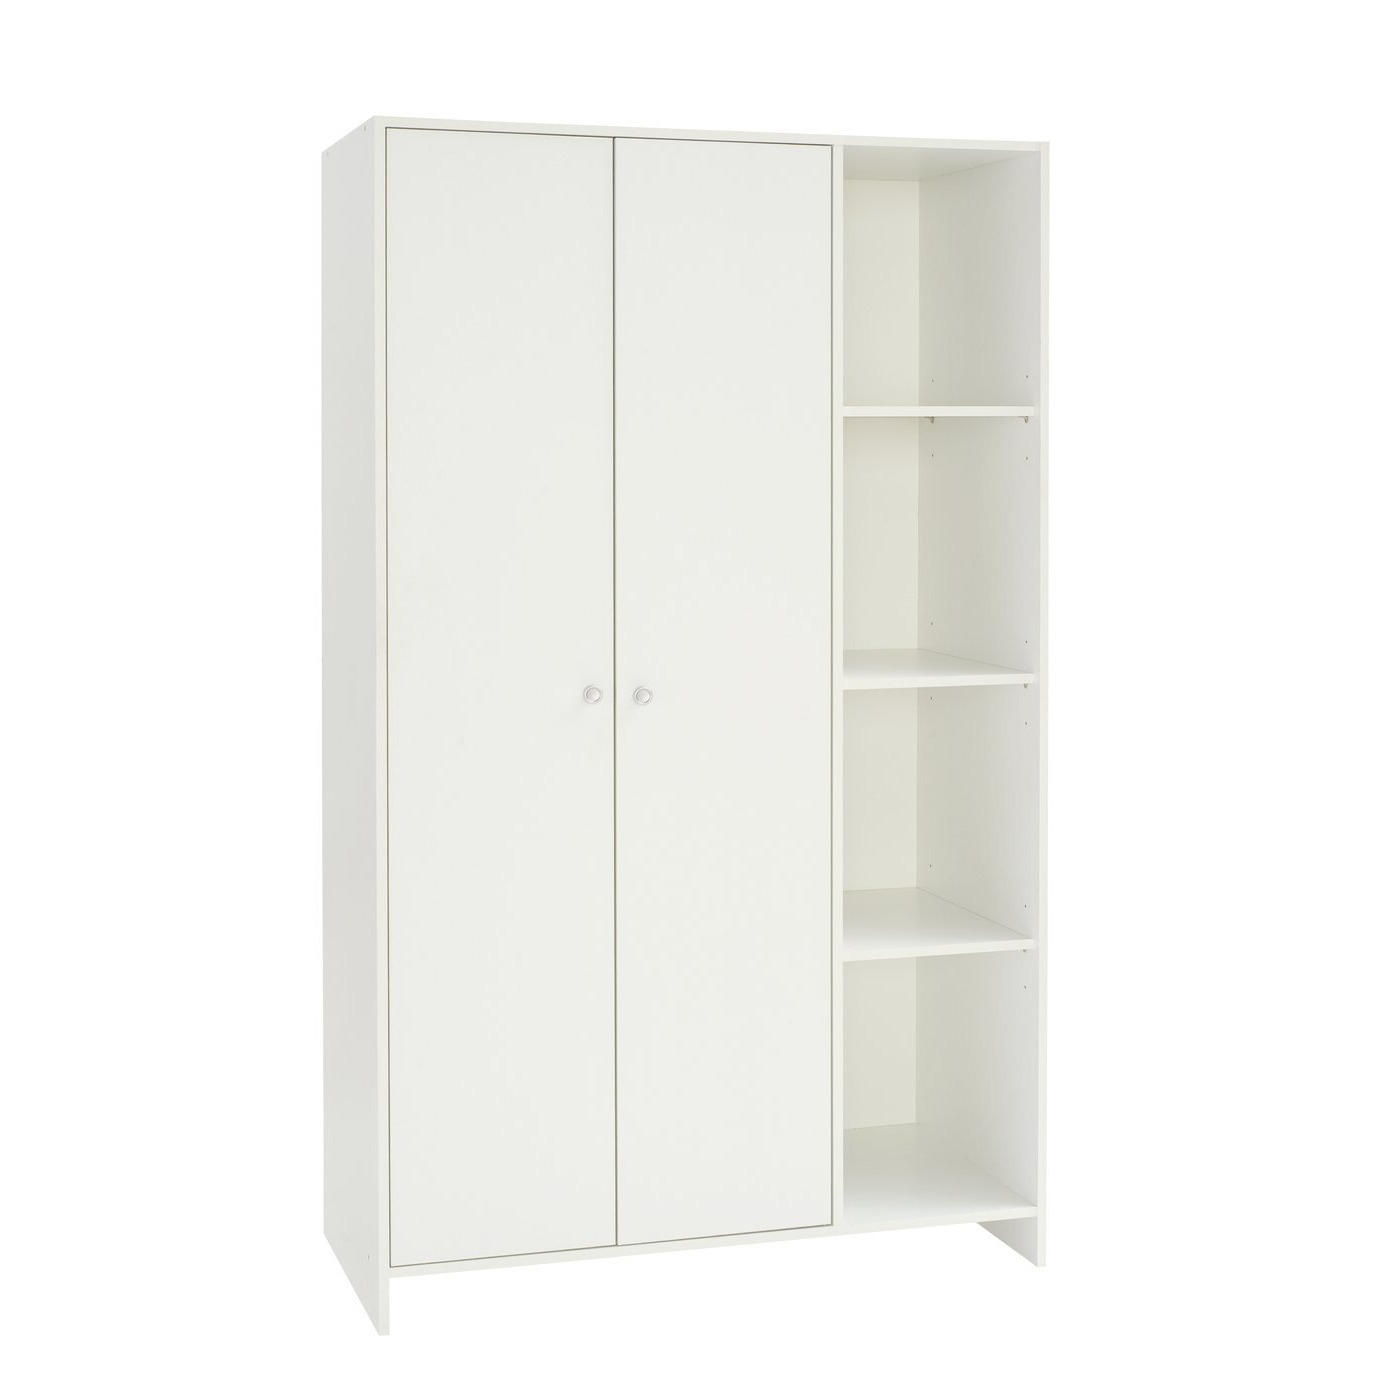 Argos Home Seville 2 Door Open Shelf Wardrobe - White - image 1